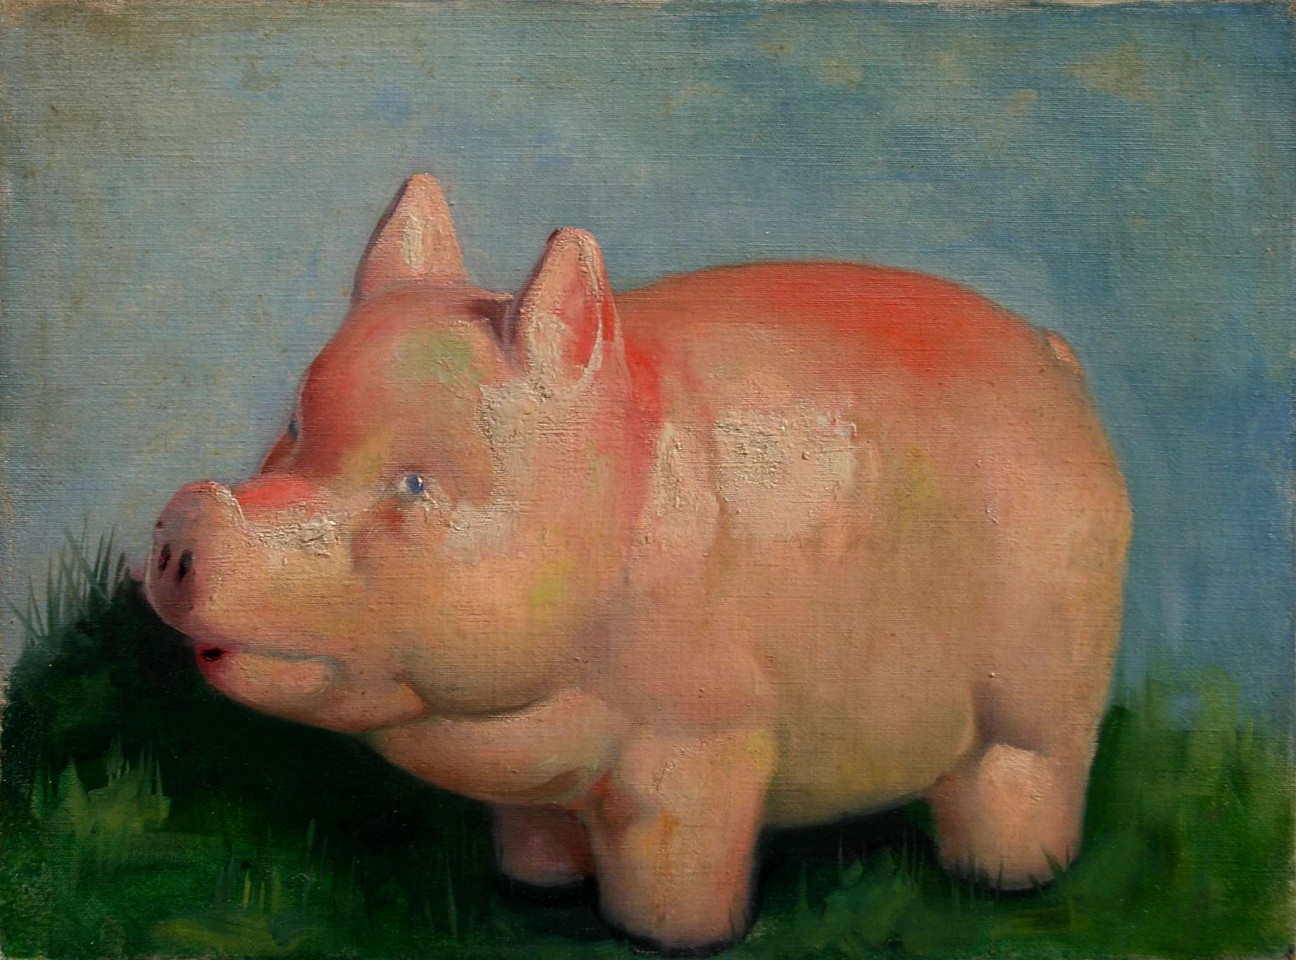 Priscilla Warren Roberts, The Little Pig
oil on canvas, 12" x 16"
unsigned
JCA 4923
$4,500